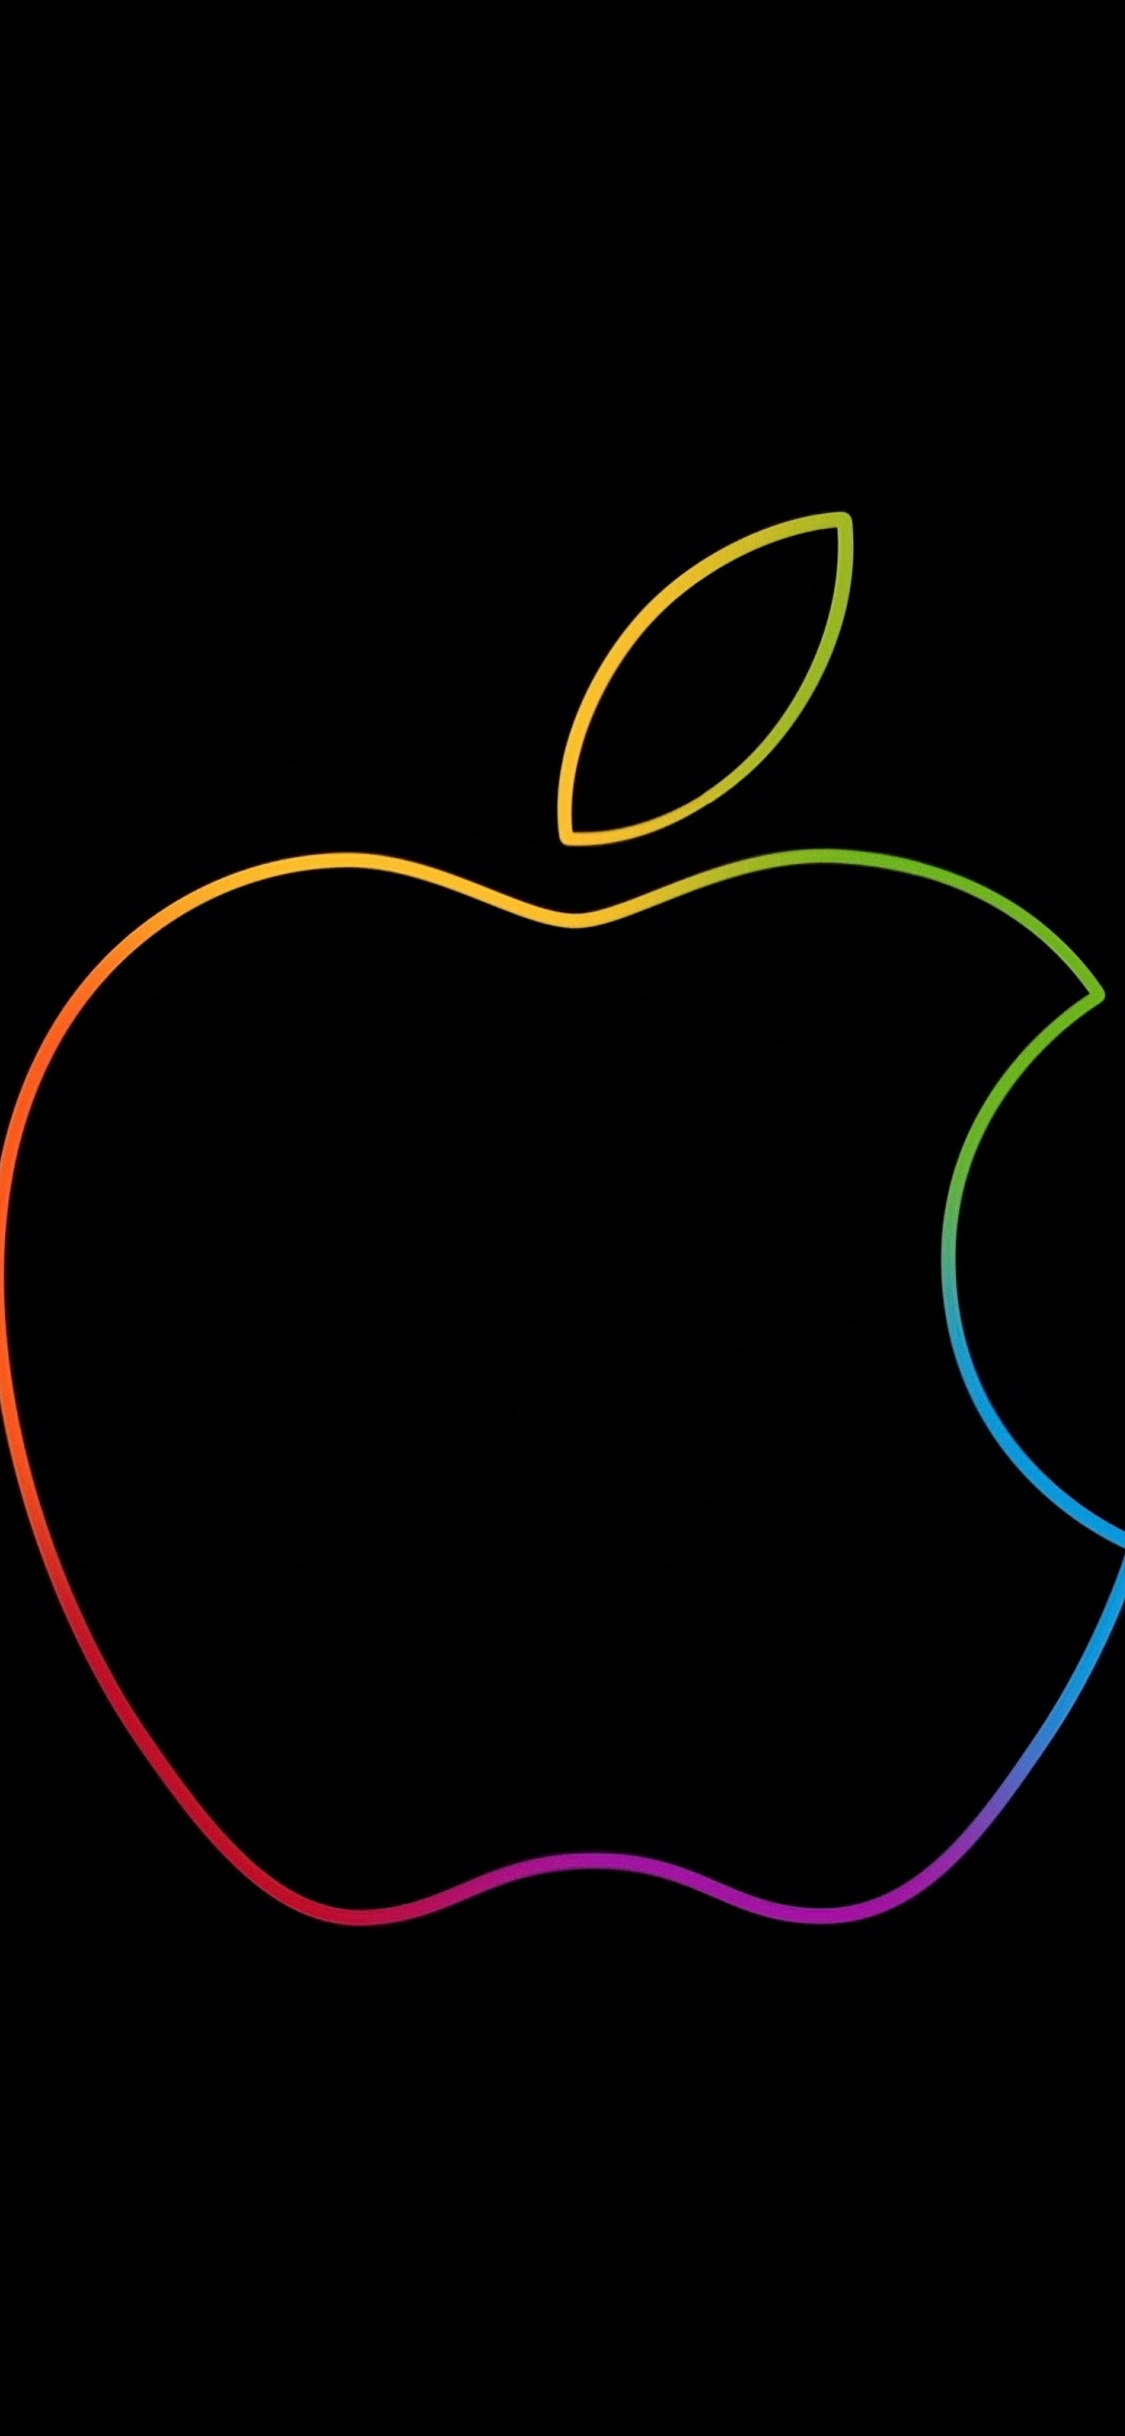 The famous Apple logo wallpaper 1125x2436